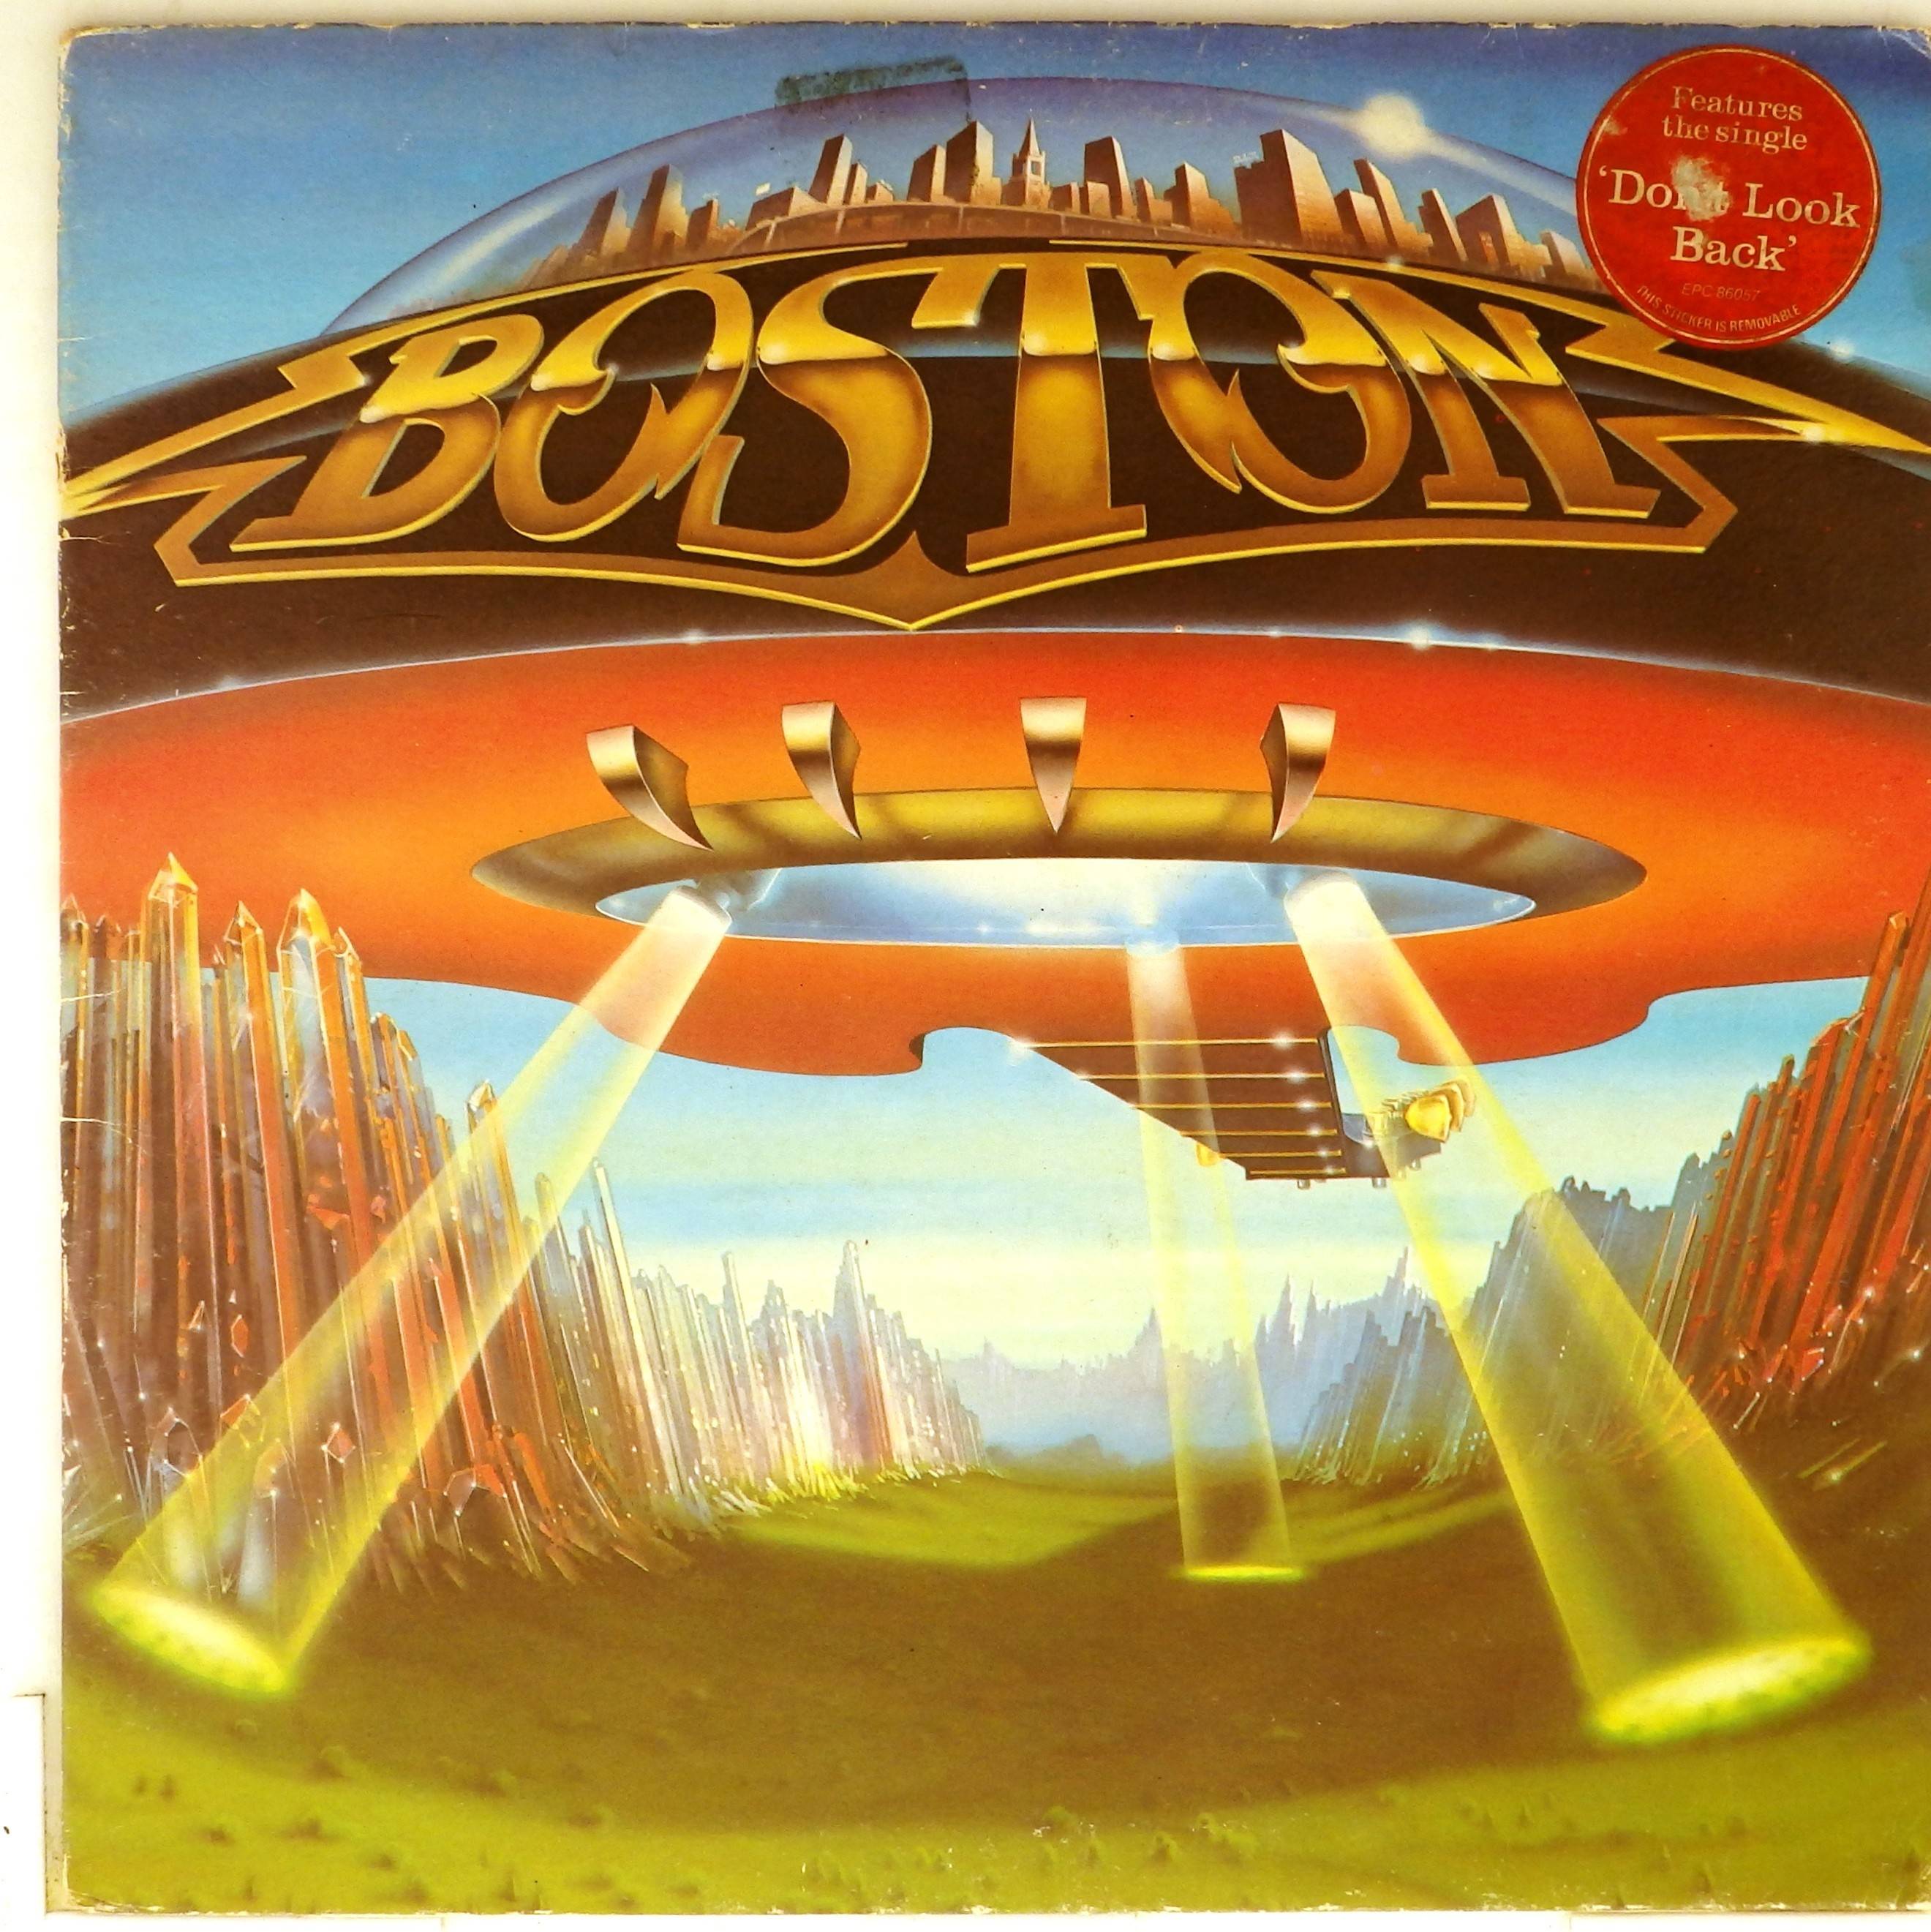 виниловая пластинка Boston